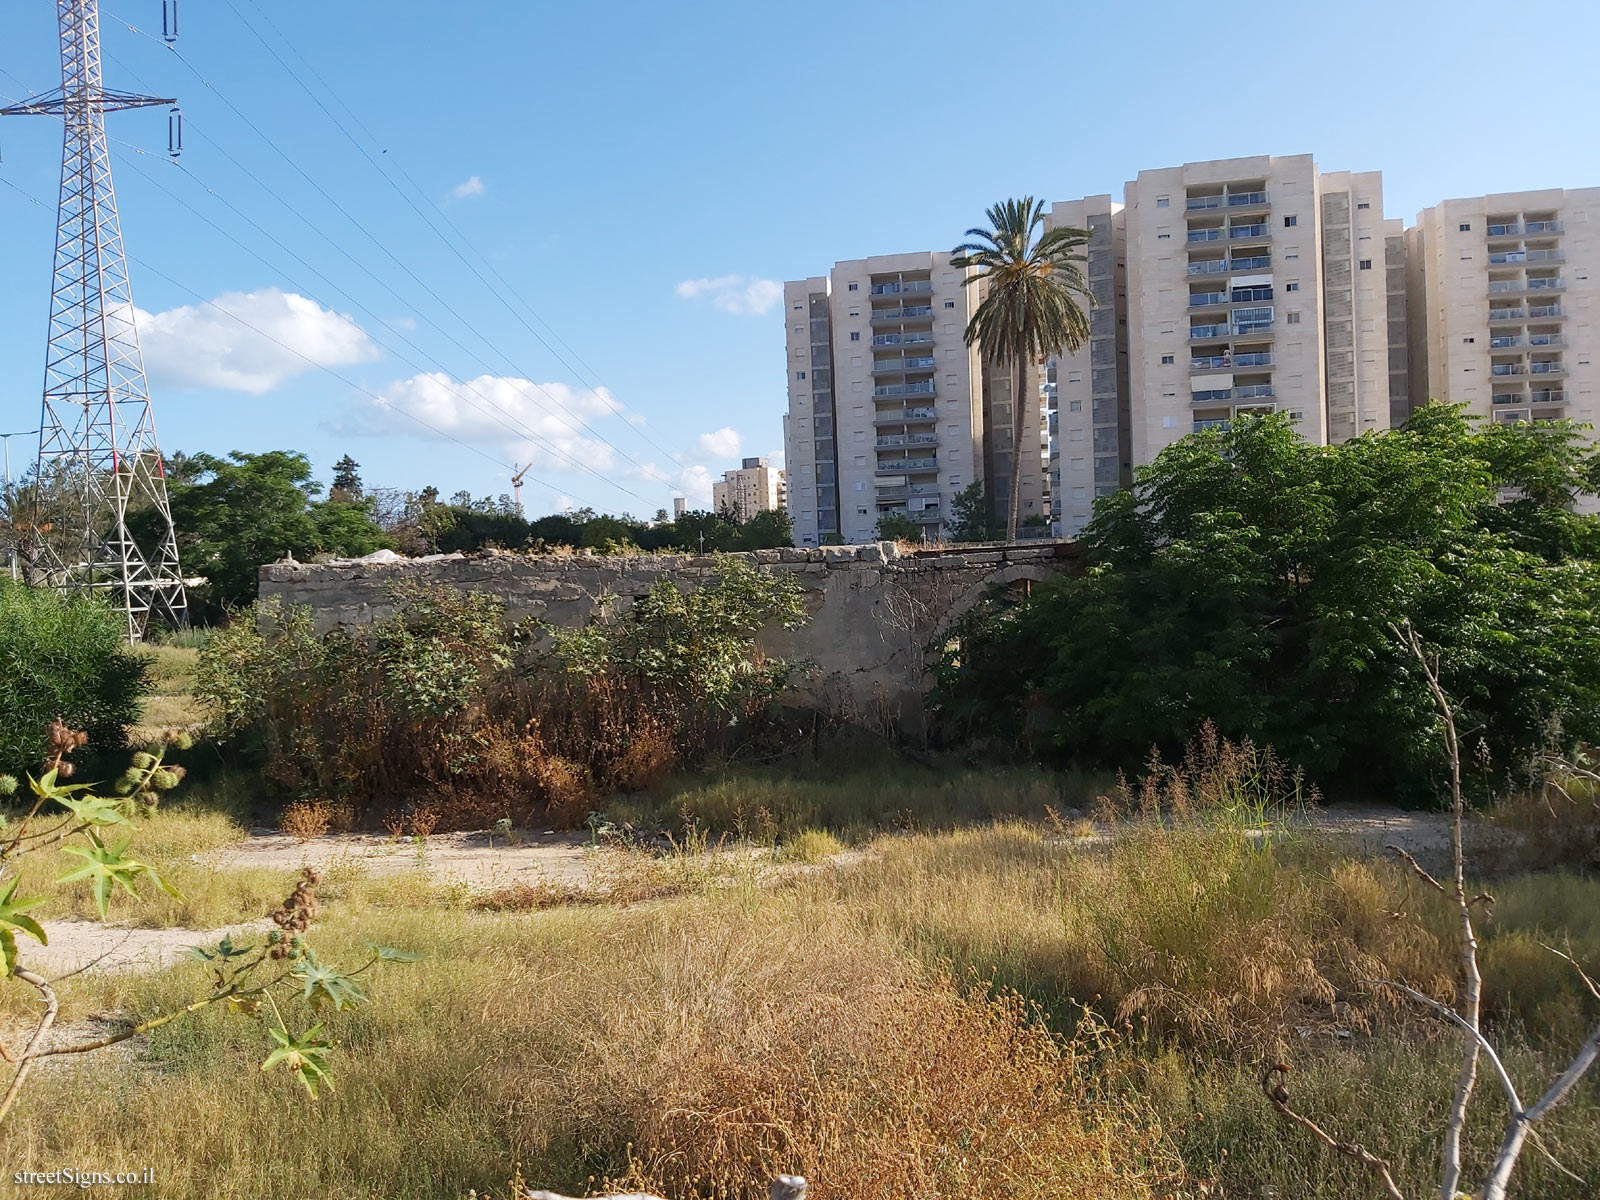 Heritage Sites in Israel - Ibrahim Pasha’s well - Eli Cohen St 27, Ashkelon, Israel